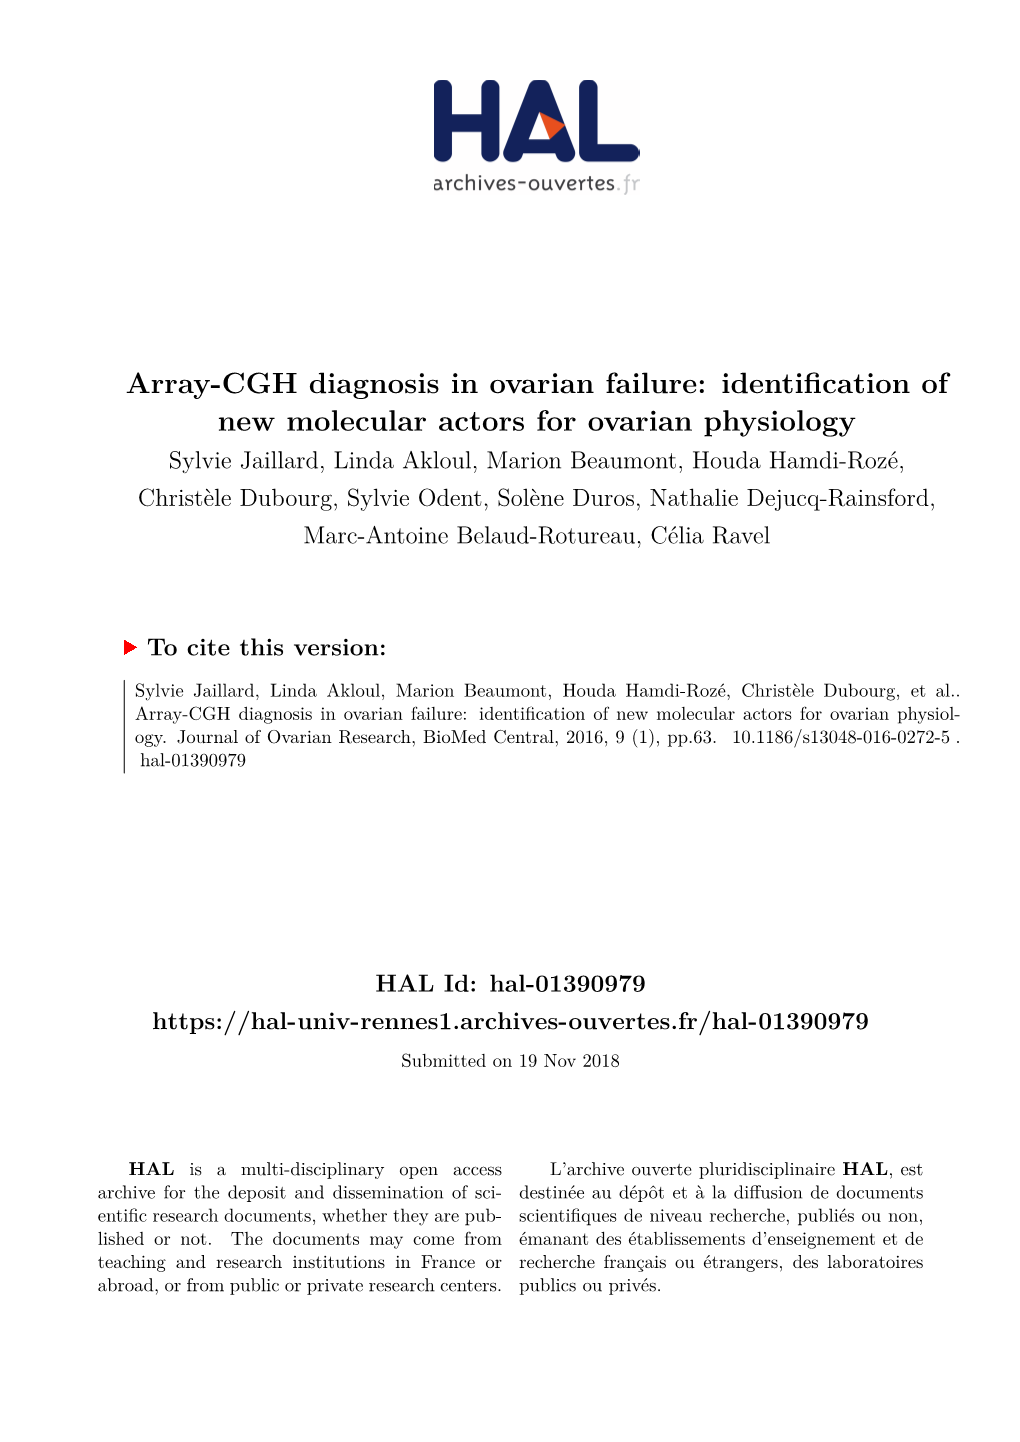 Array-CGH Diagnosis in Ovarian Failure